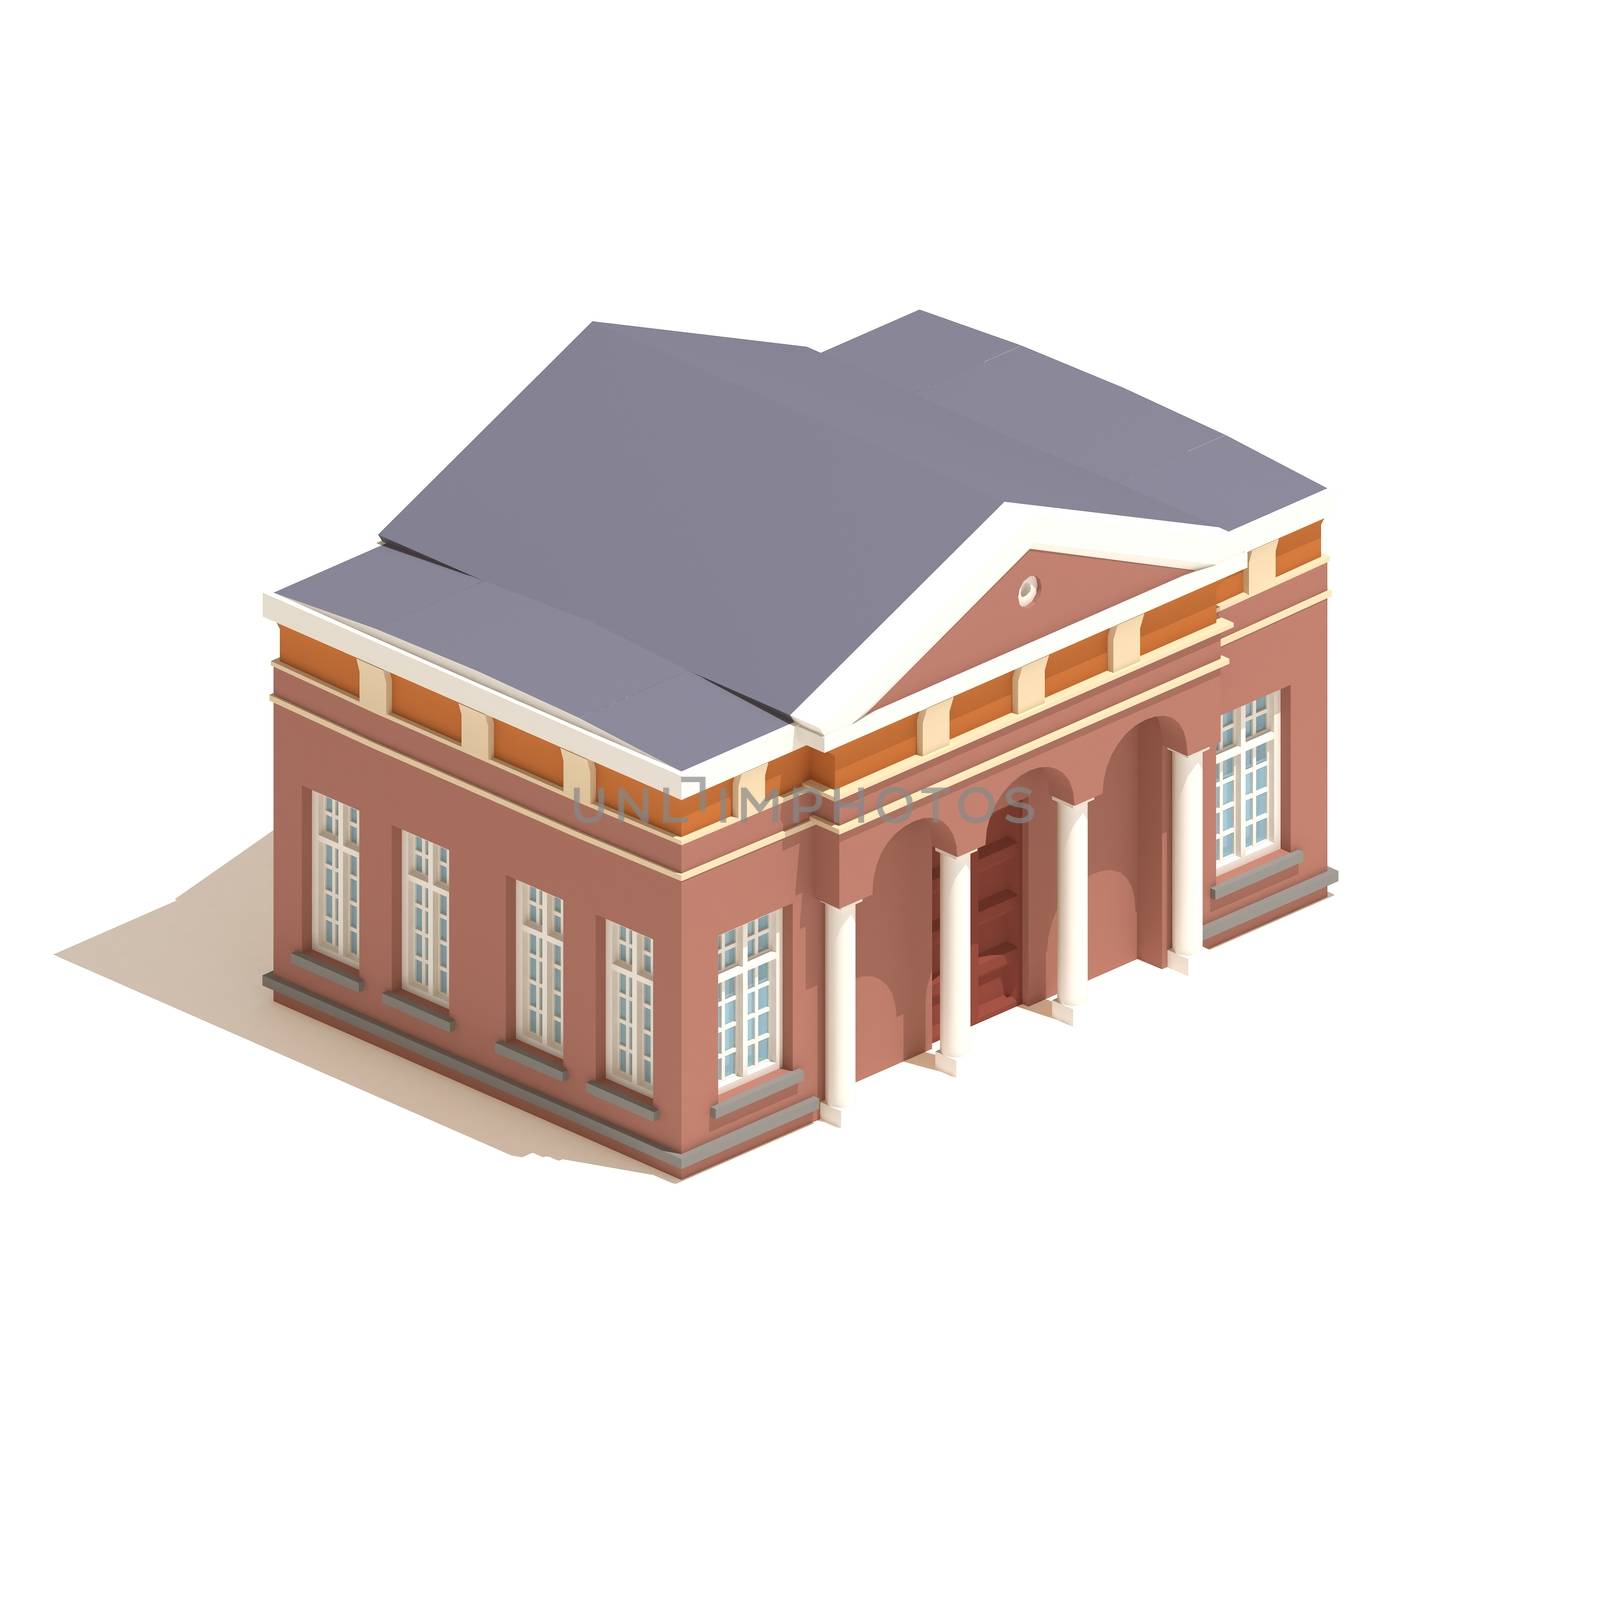 Flat 3d model isometric city hall or university building  illustration isolated on white background. by ingalinder